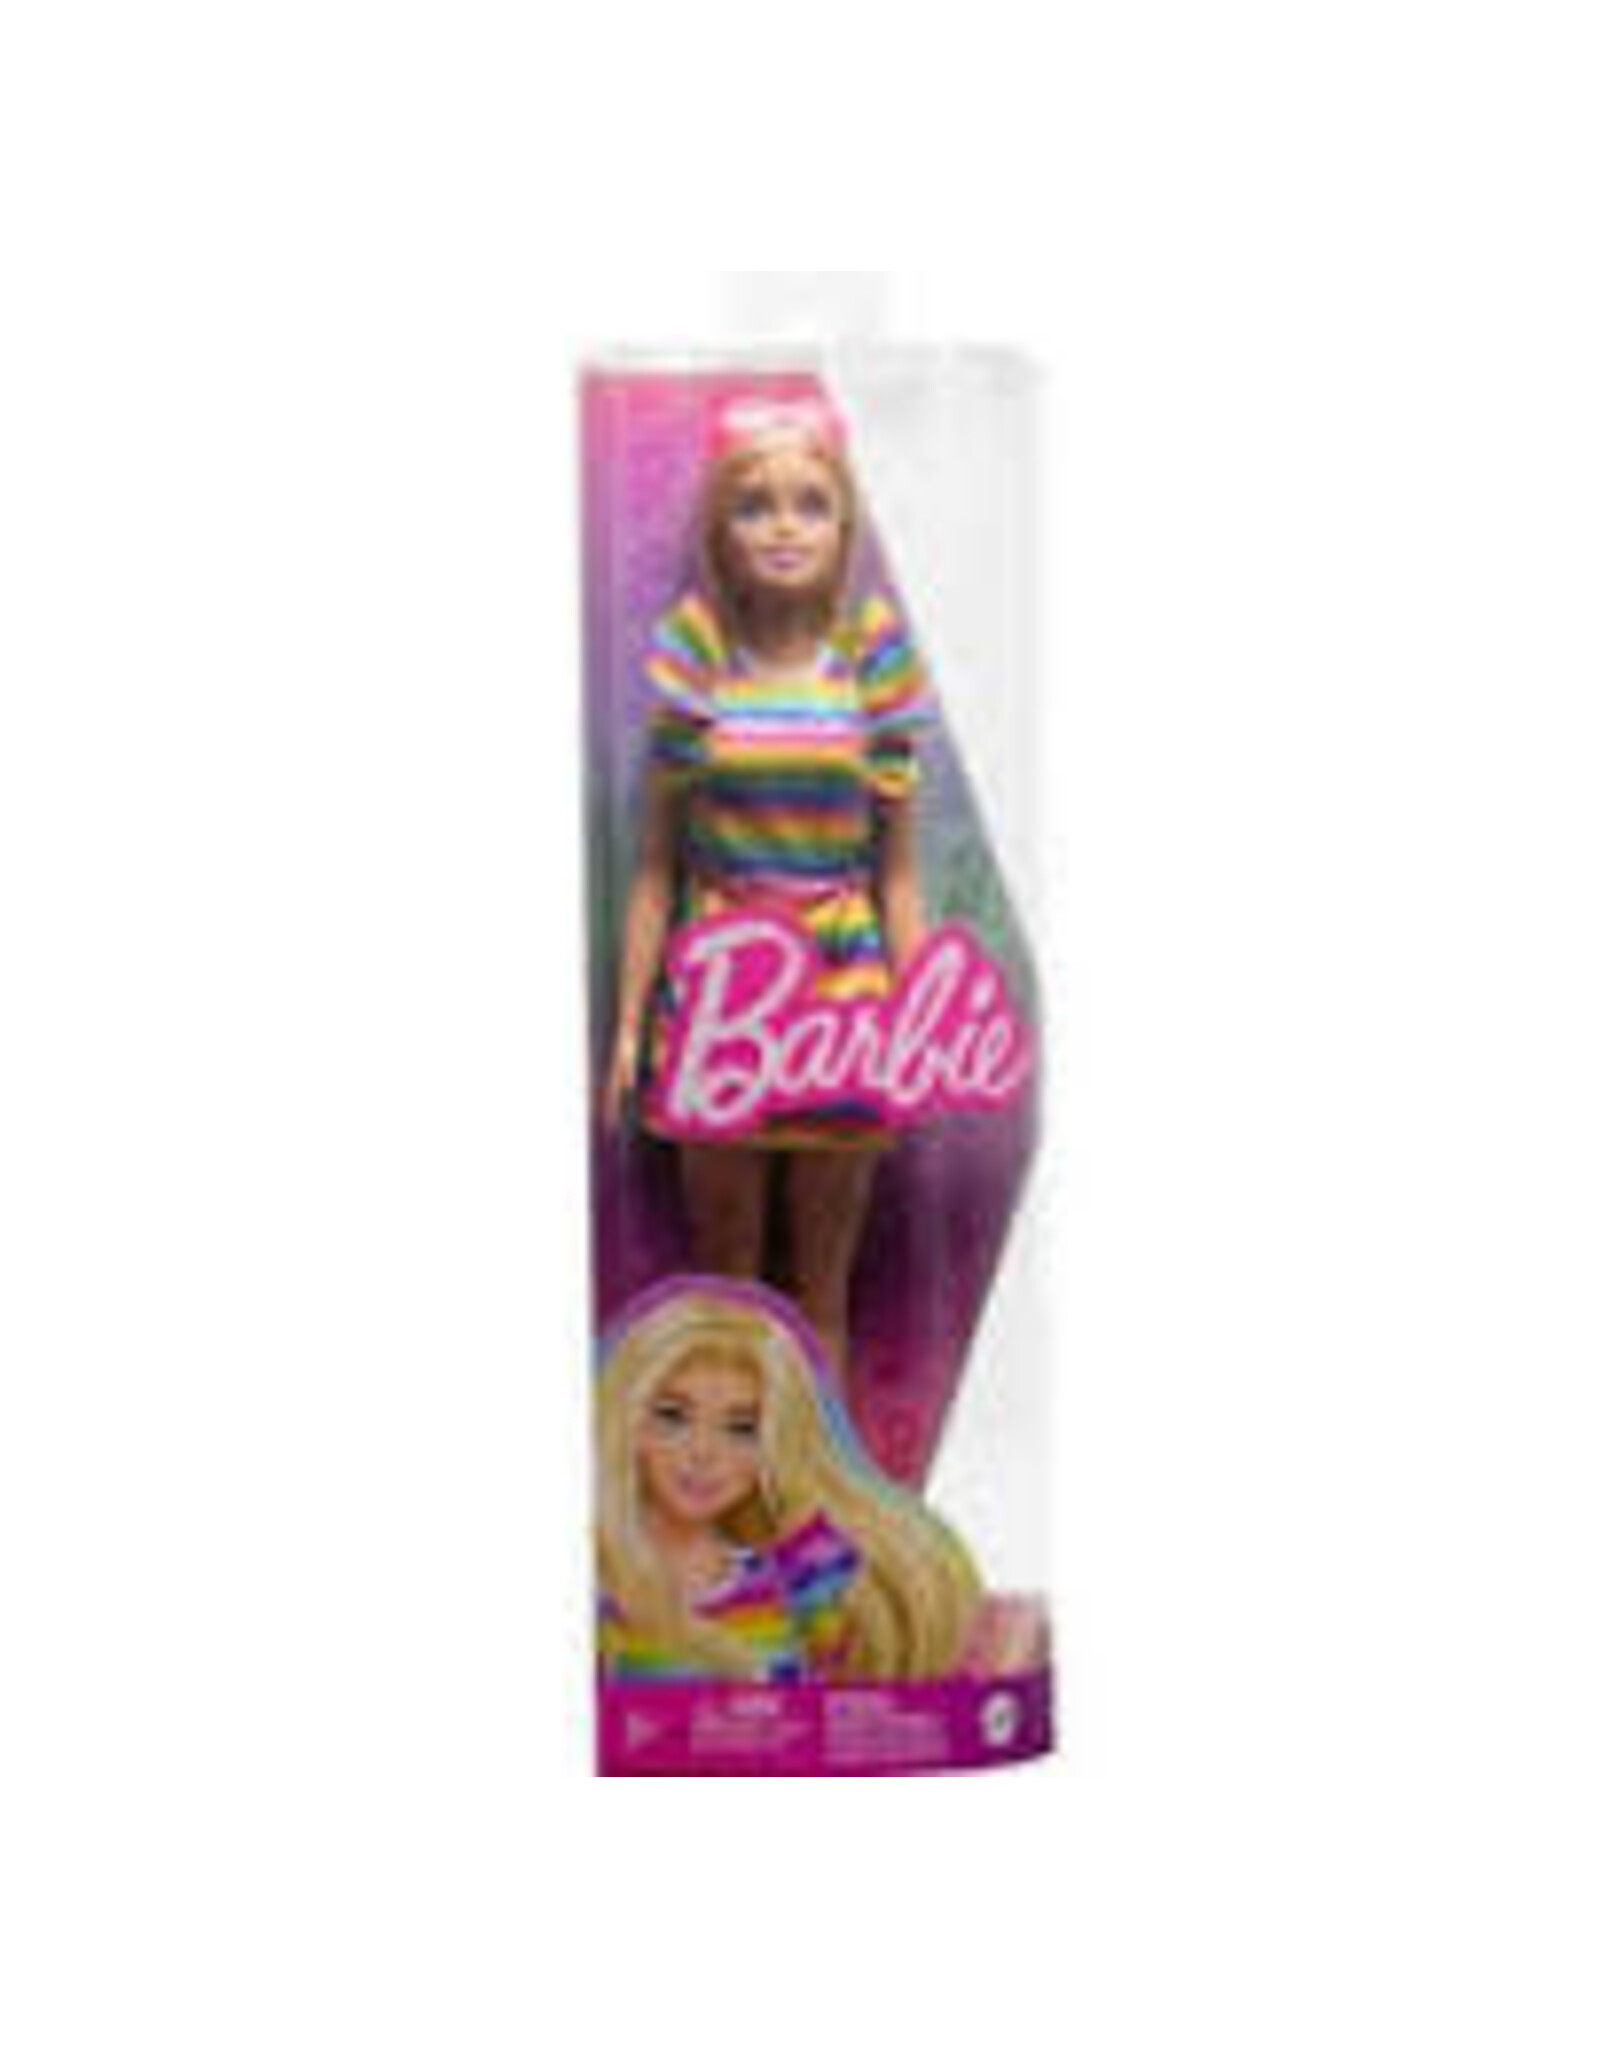 Barbie Barbie Blonde Doll with Braces and Rainbow Dress